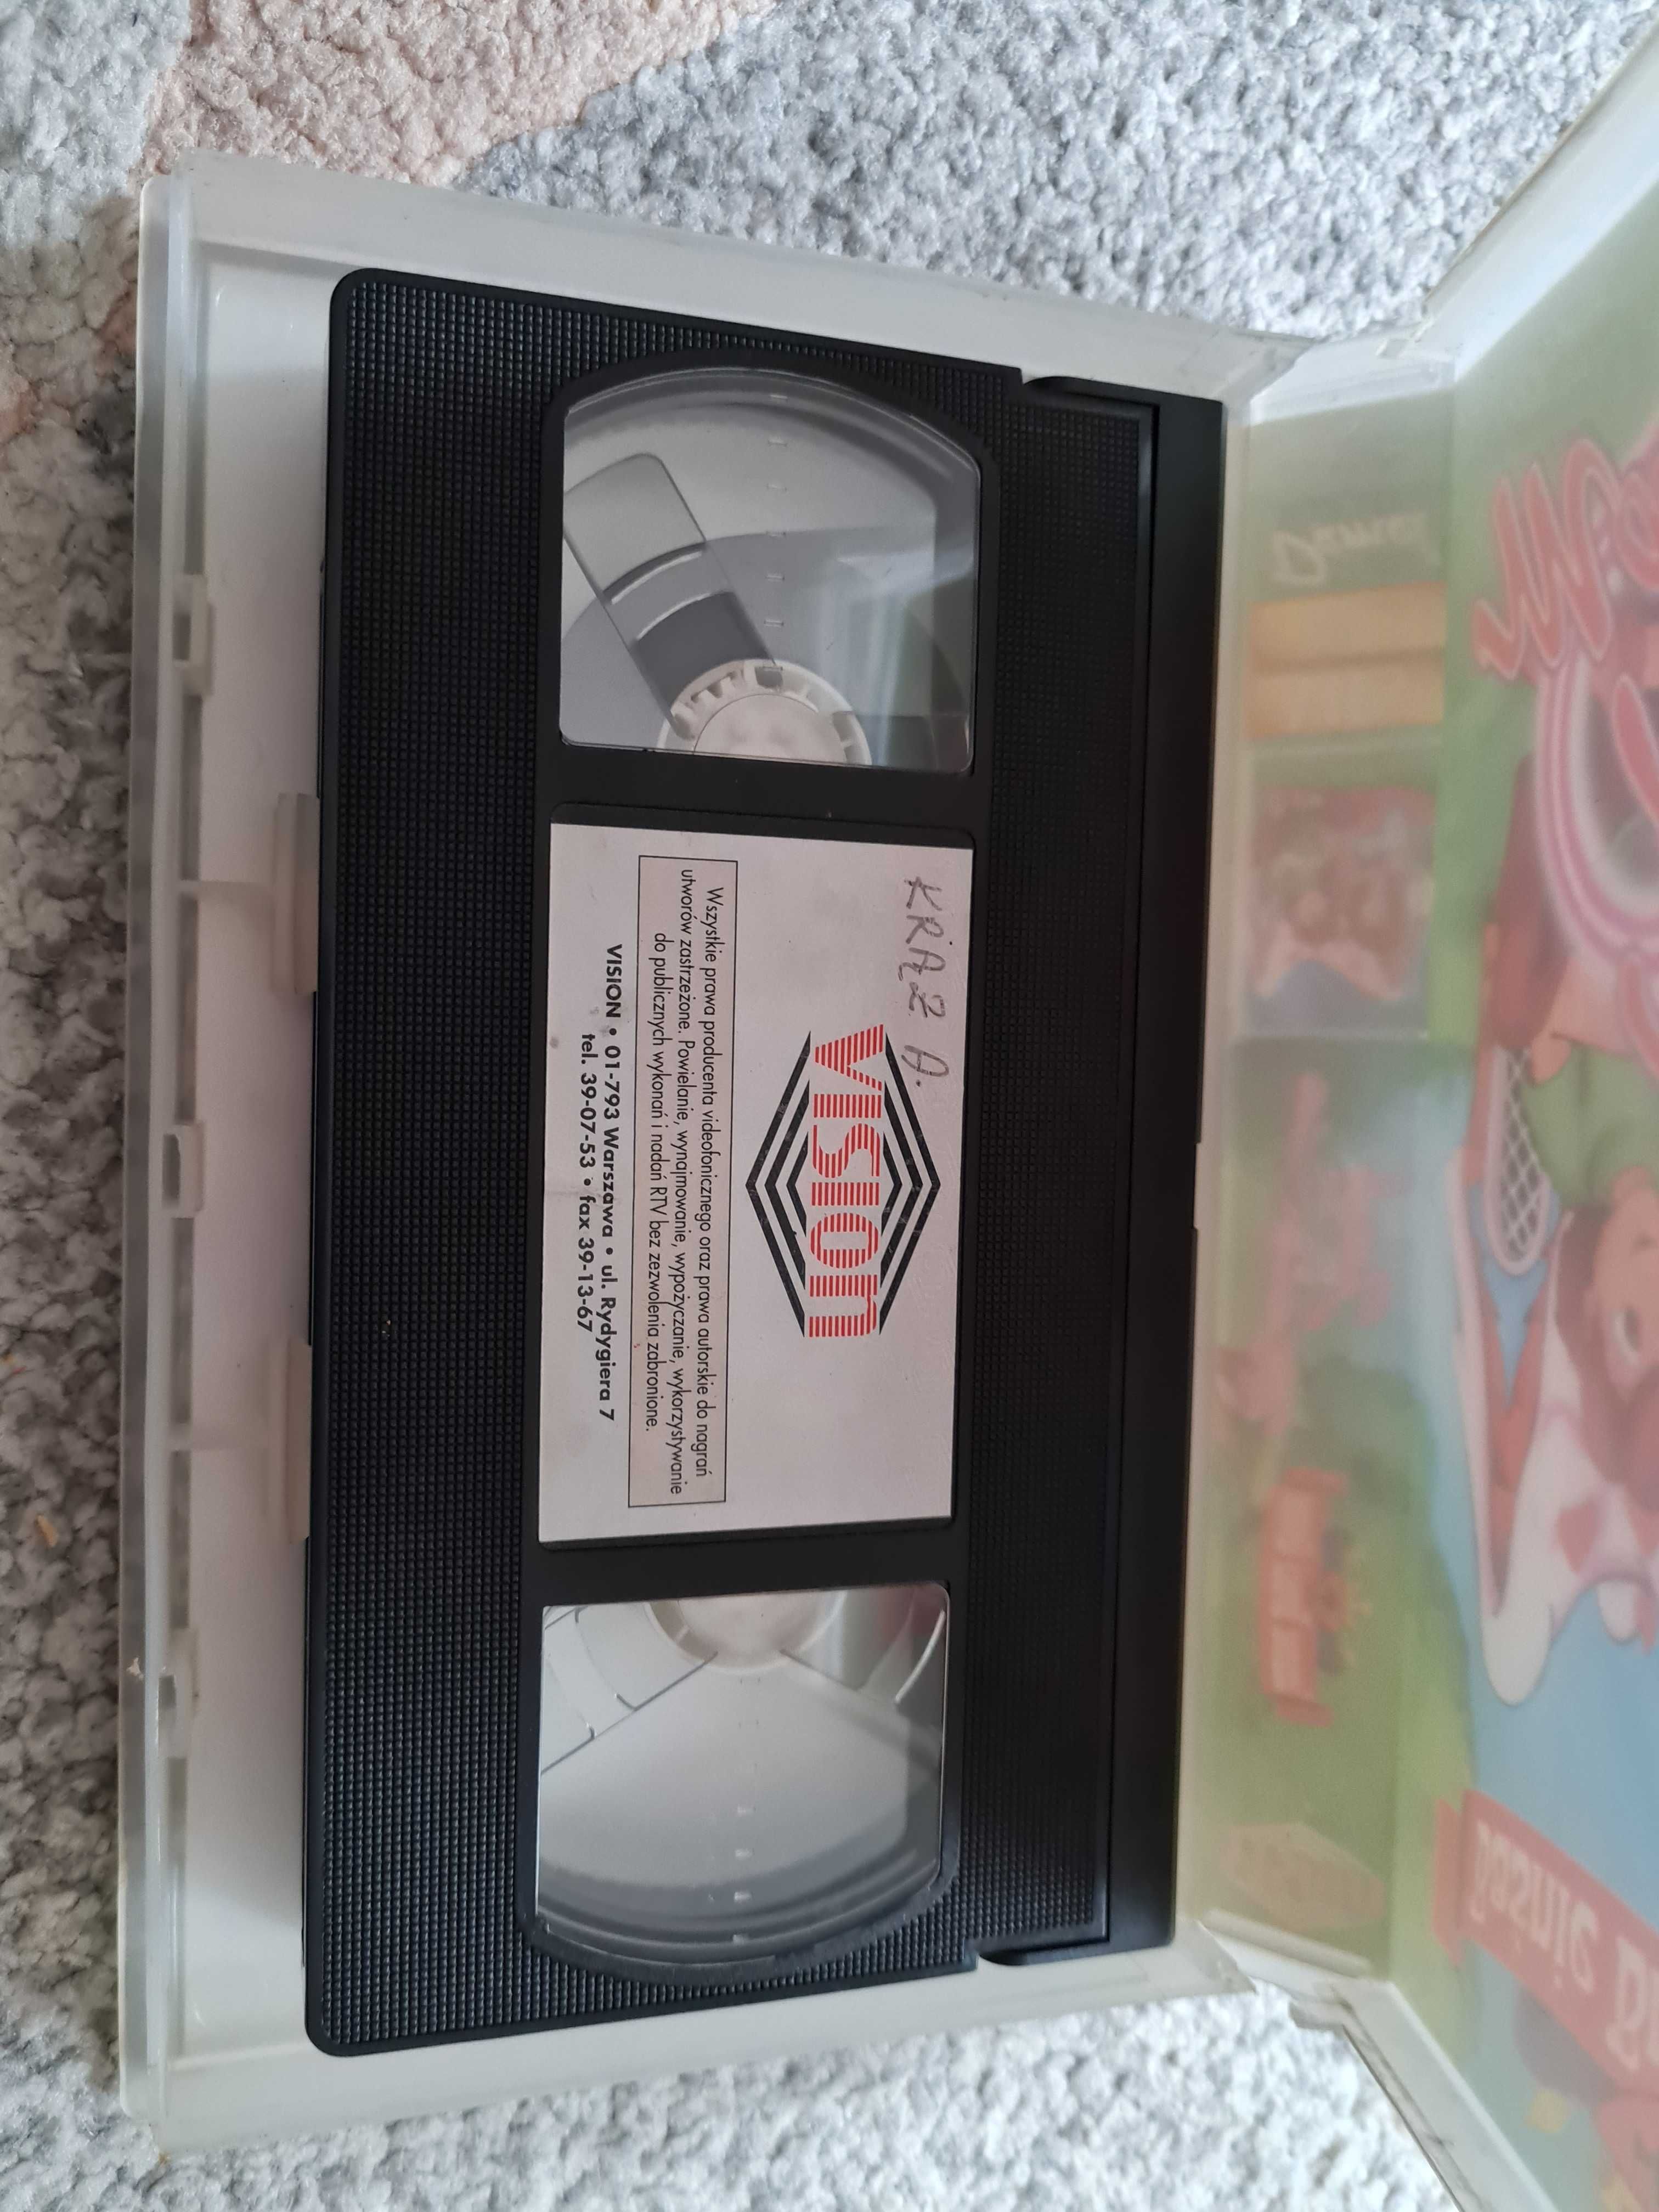 Baśnie braci Grimm kaseta VHS